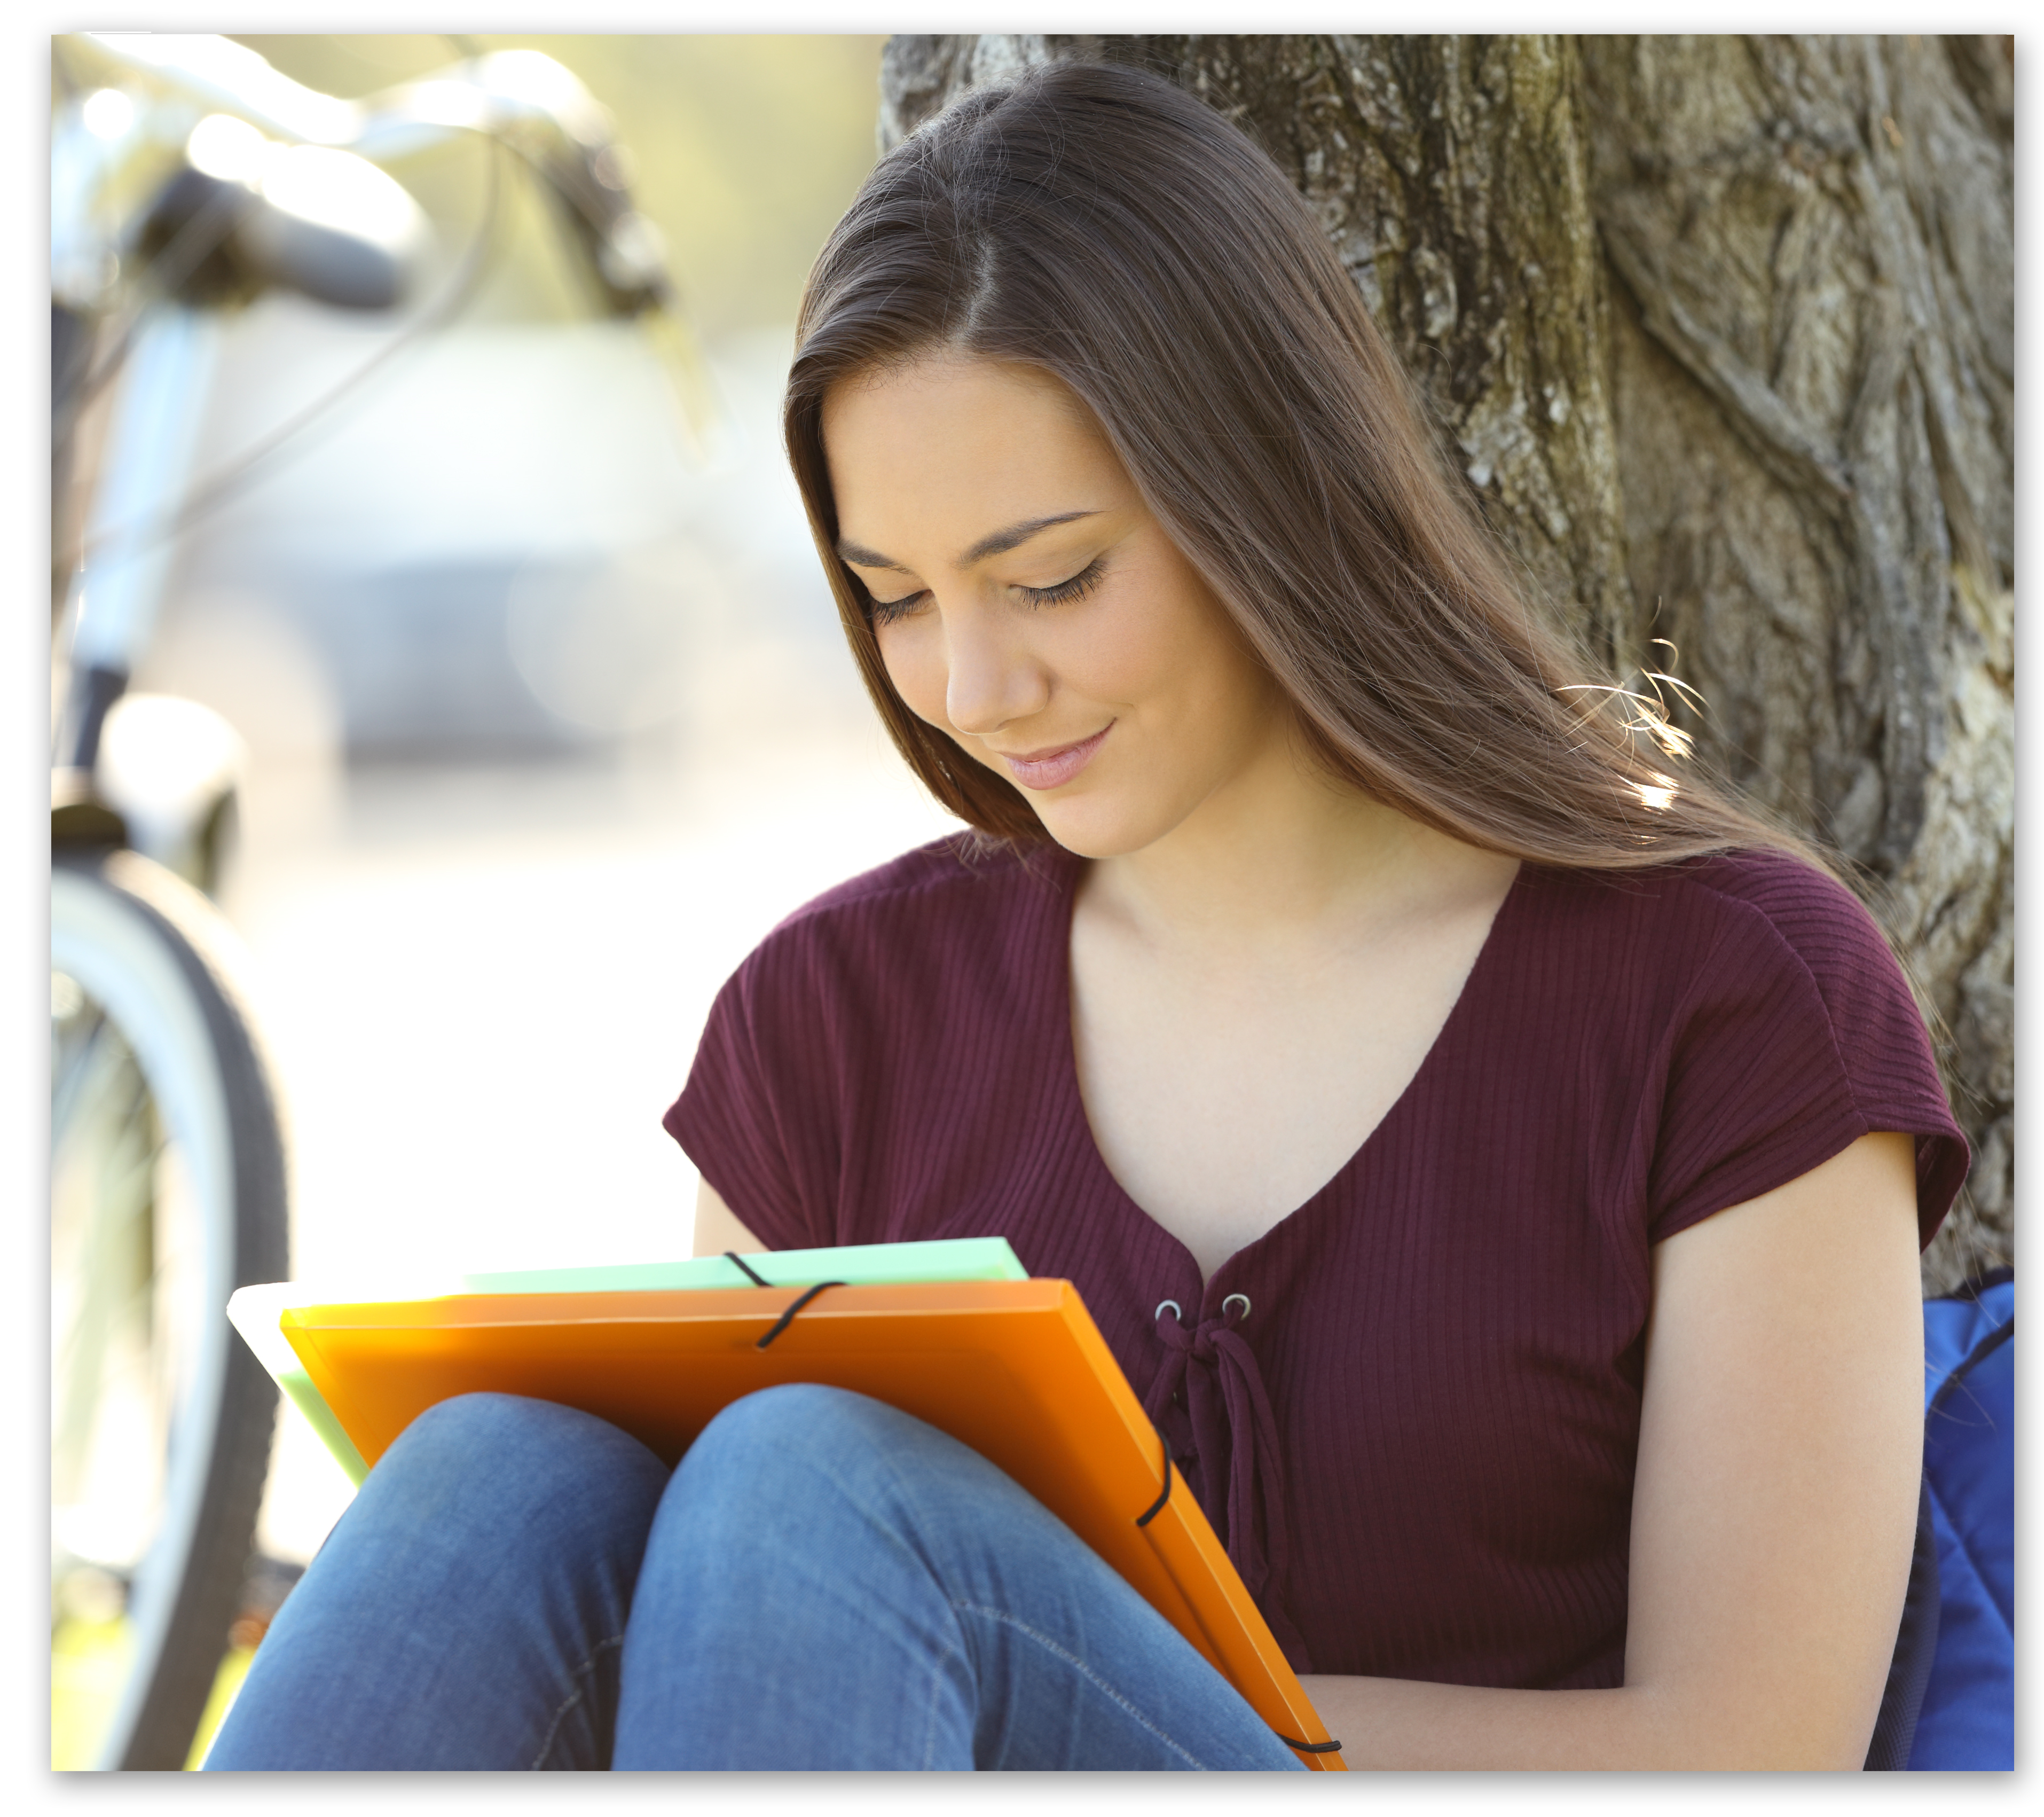 Teenage girl sitting in front of tree doing homework